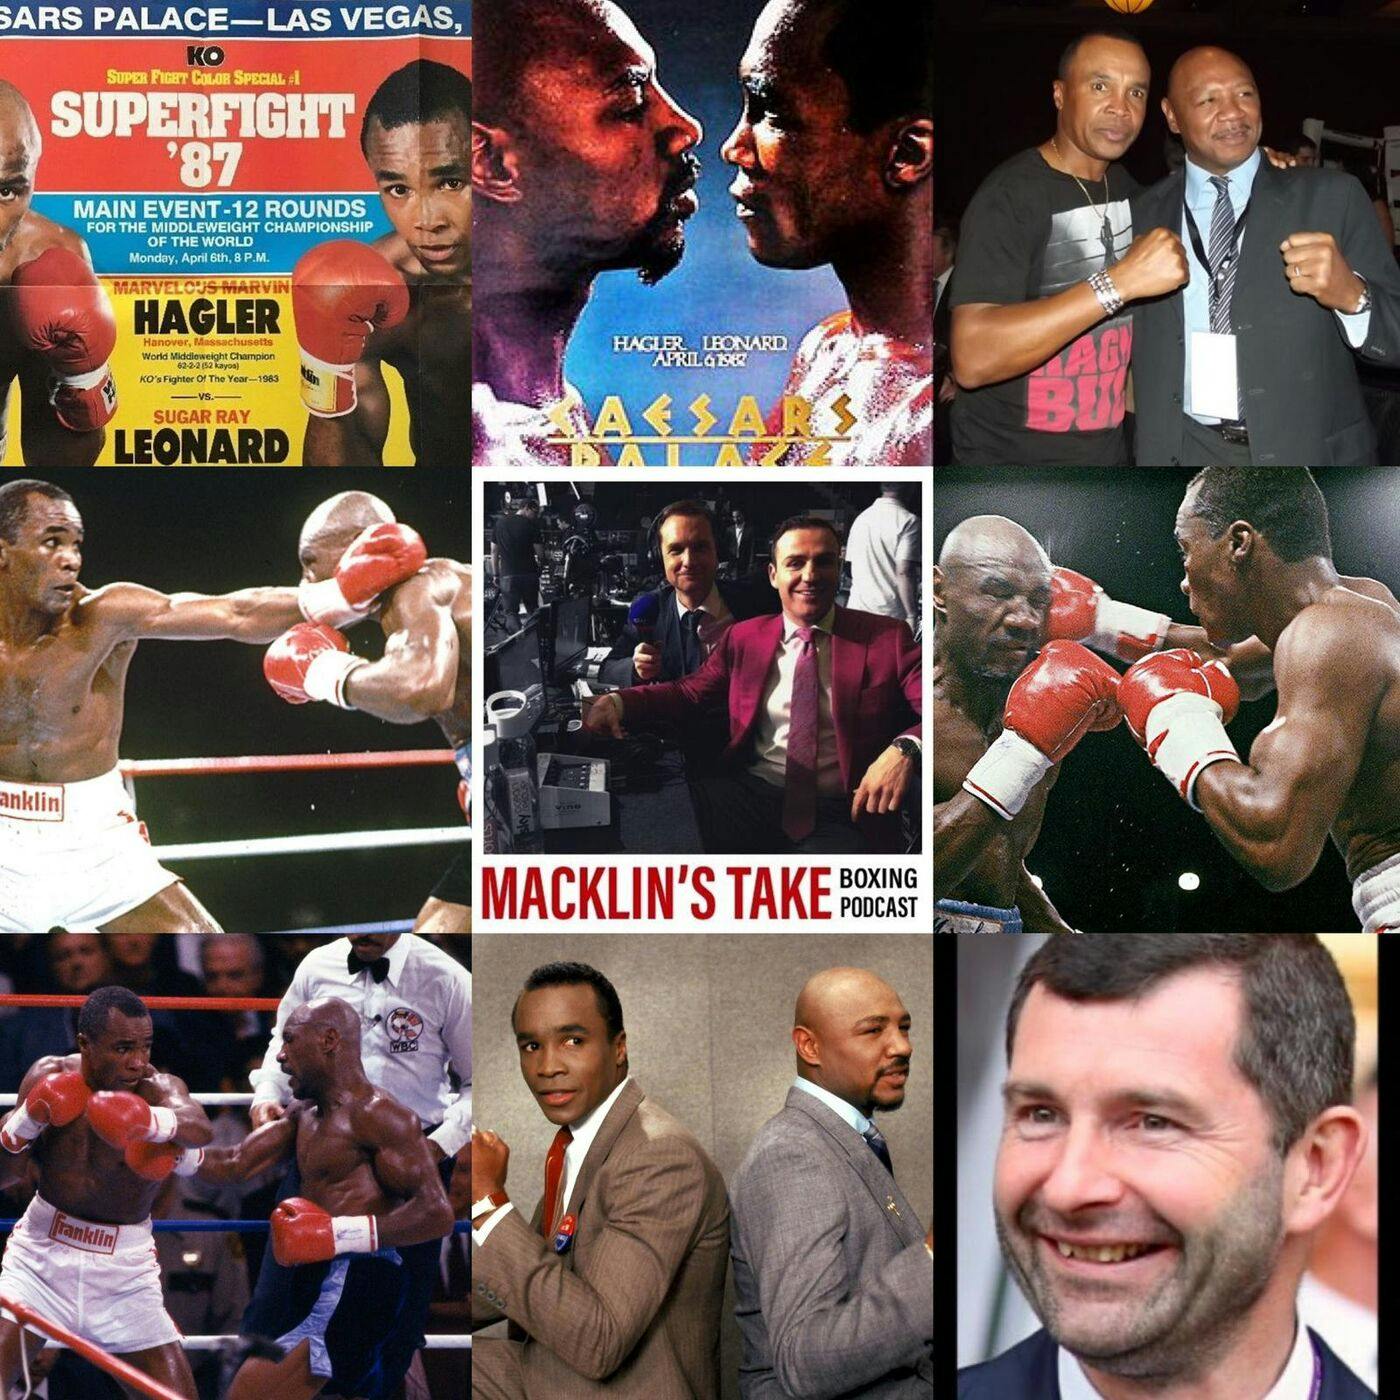 Macklin's Take #85 – Hagler vs Leonard Super Fight Special with Brian Doogan